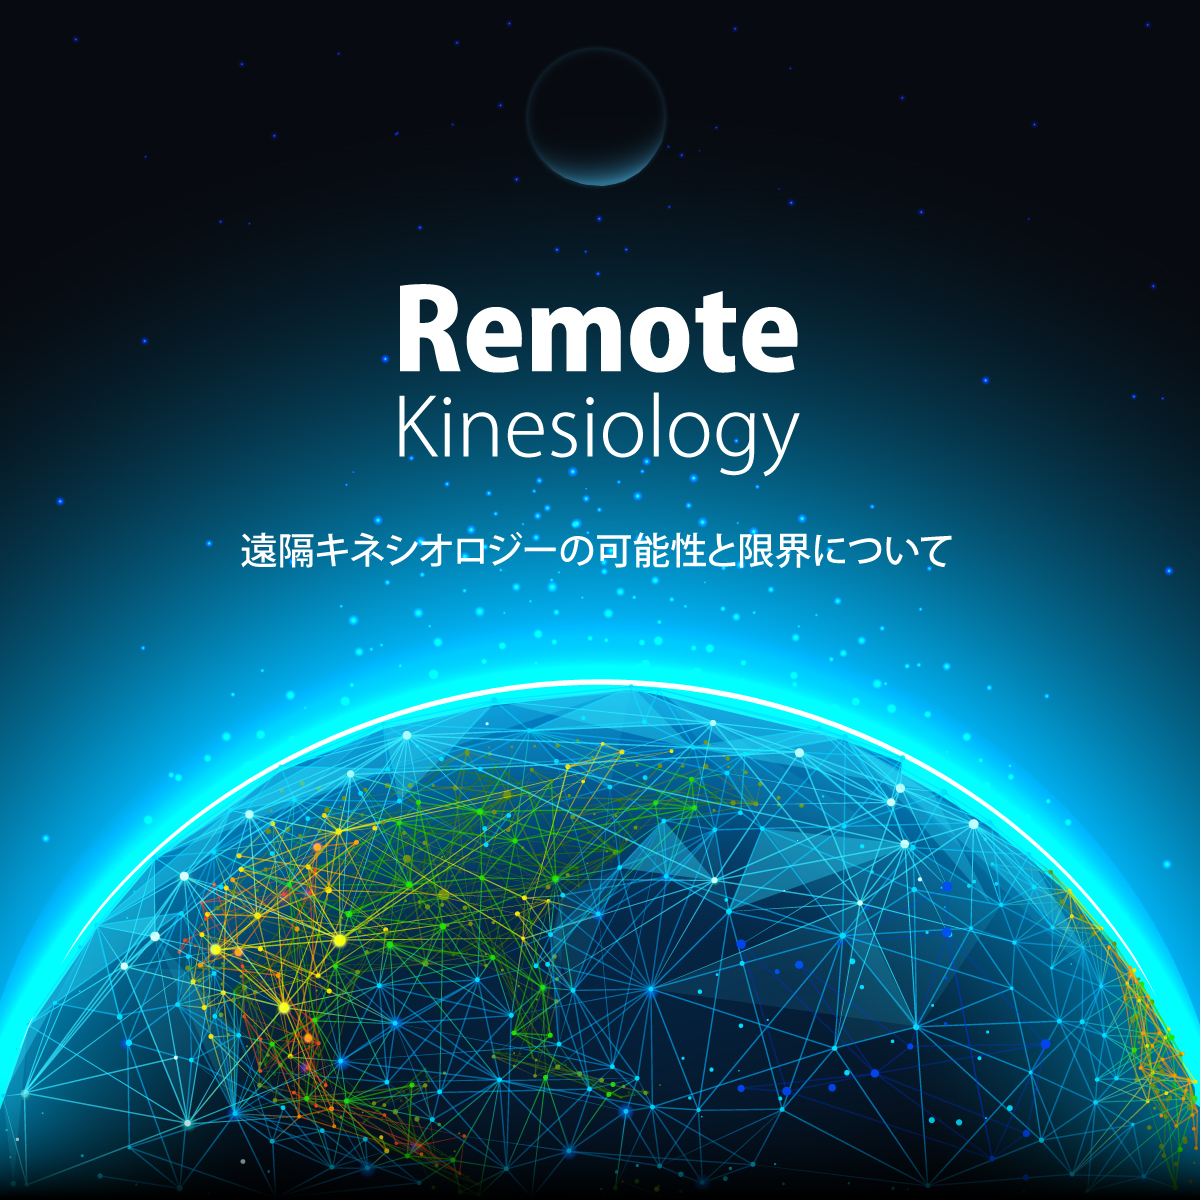 Remote kinesiology